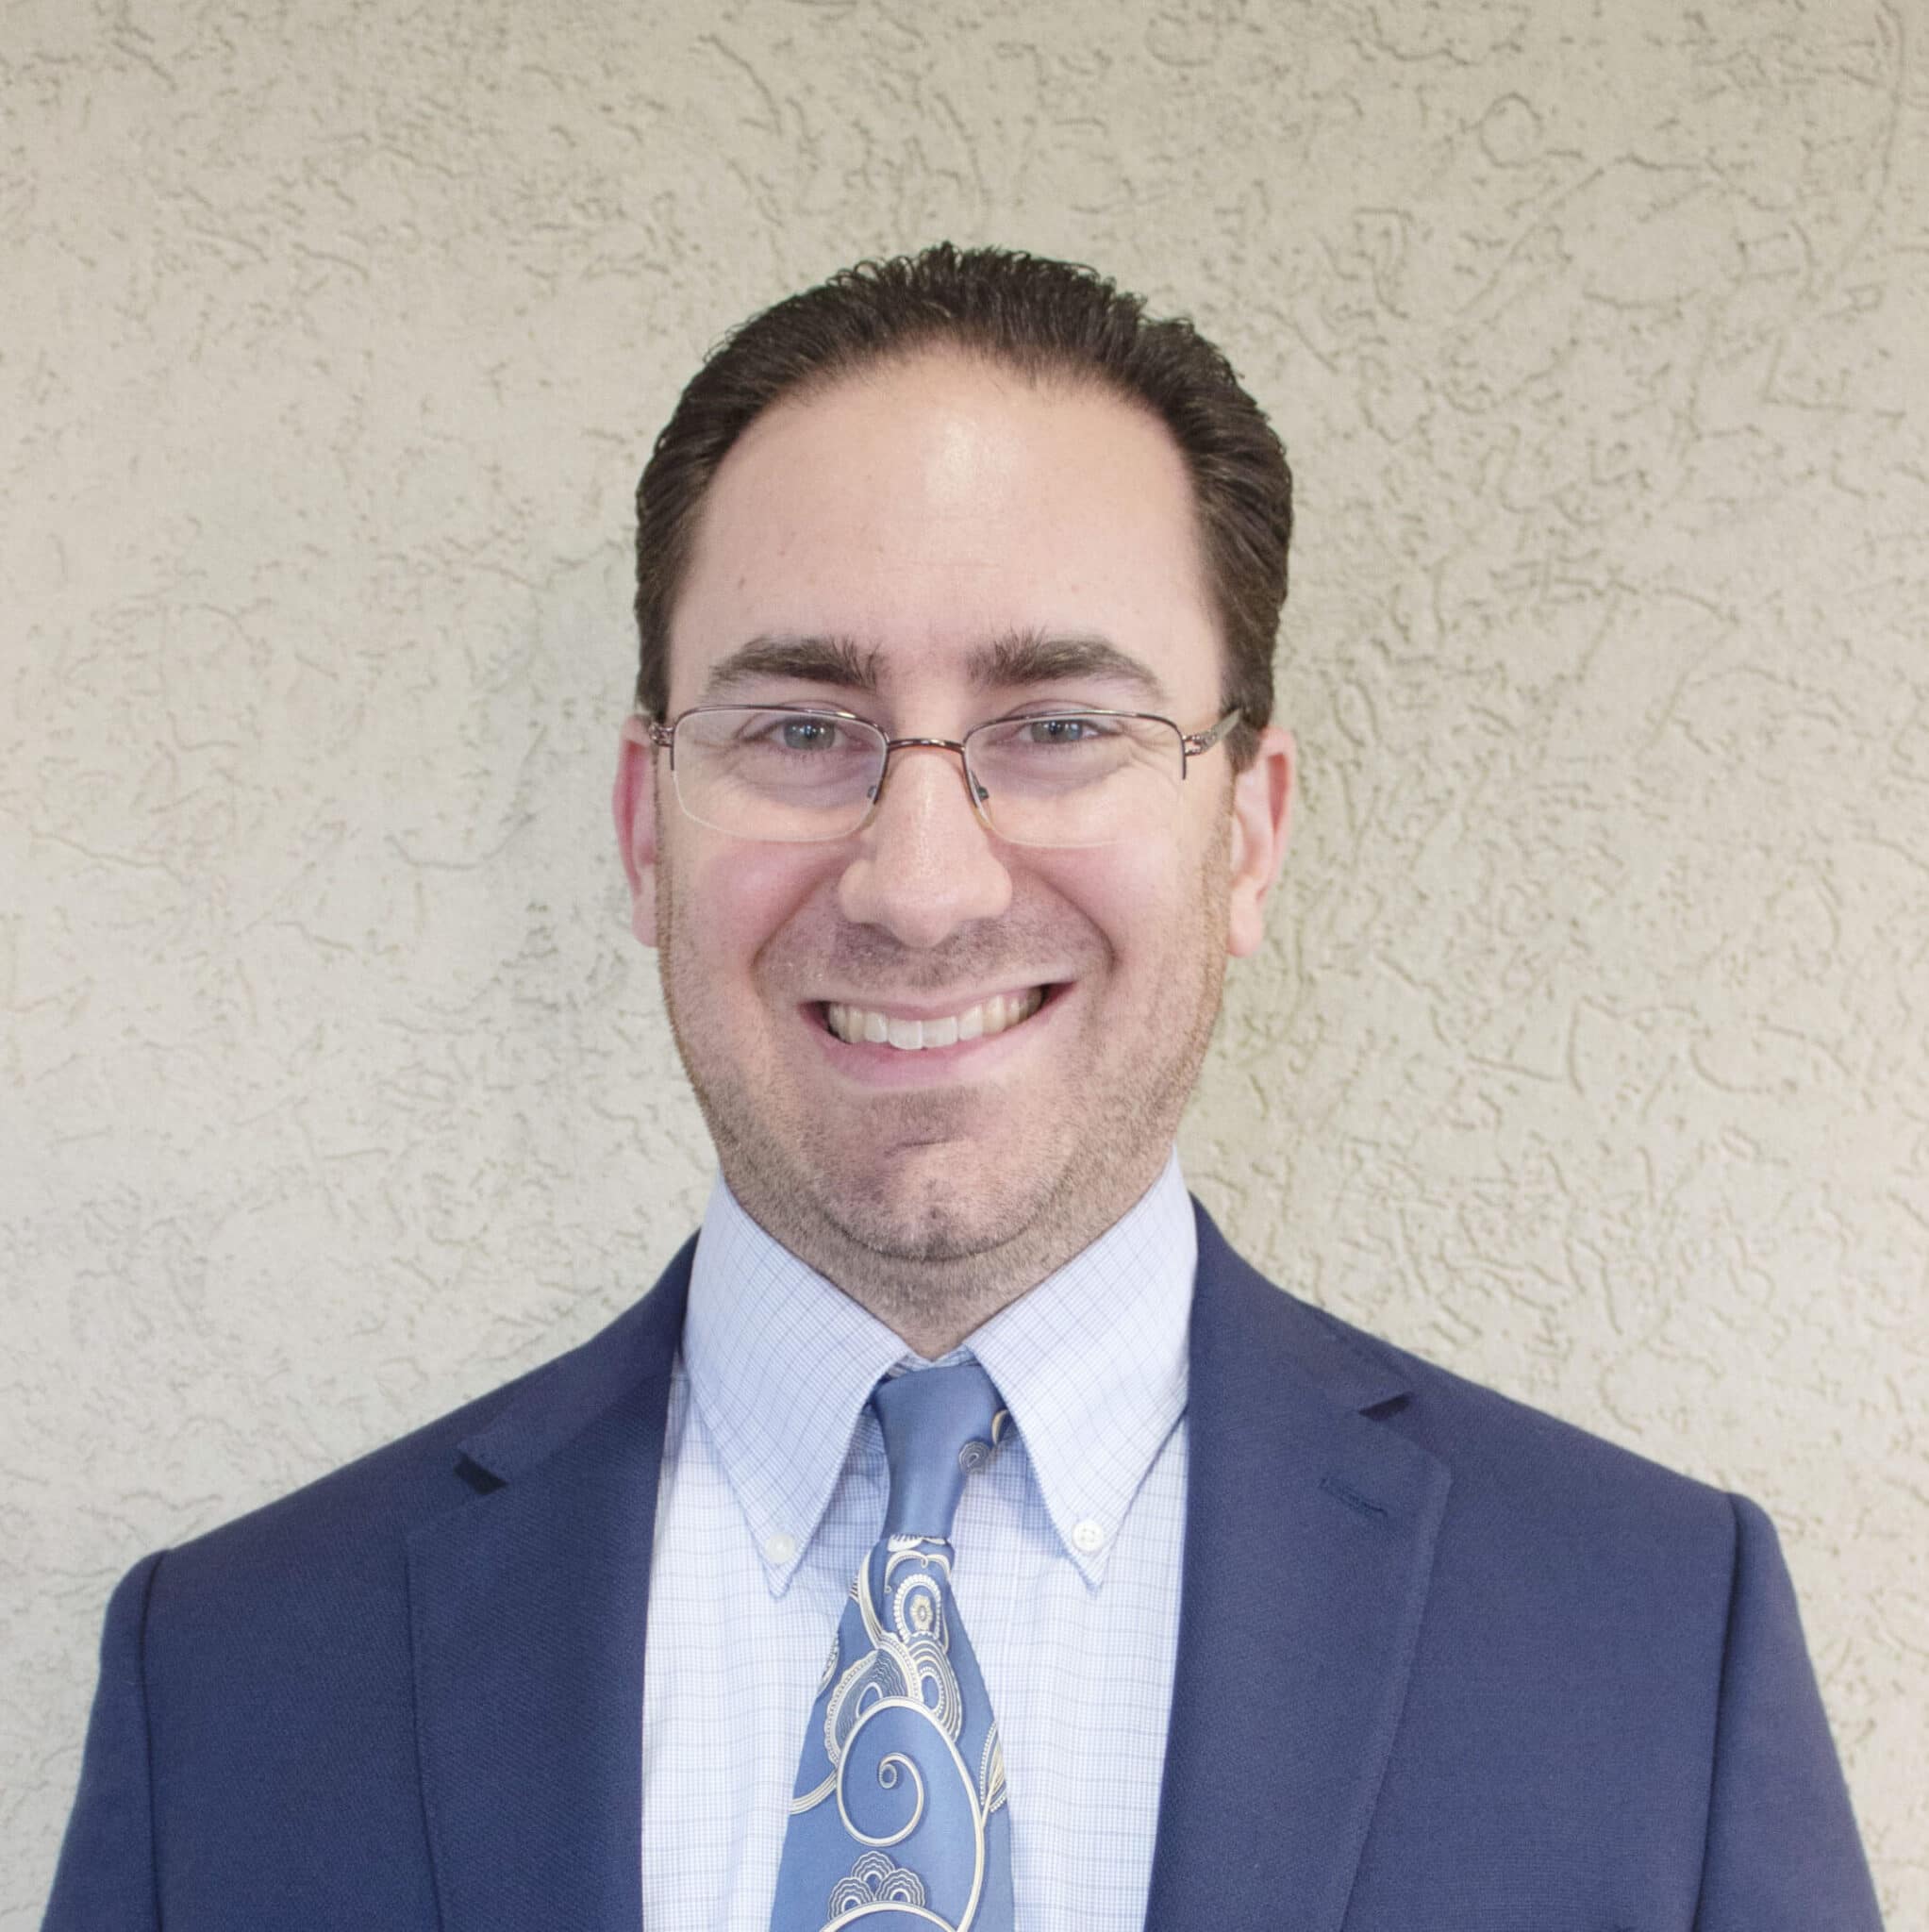 Jason Levine, President & CEO of Harry Levine Insurance